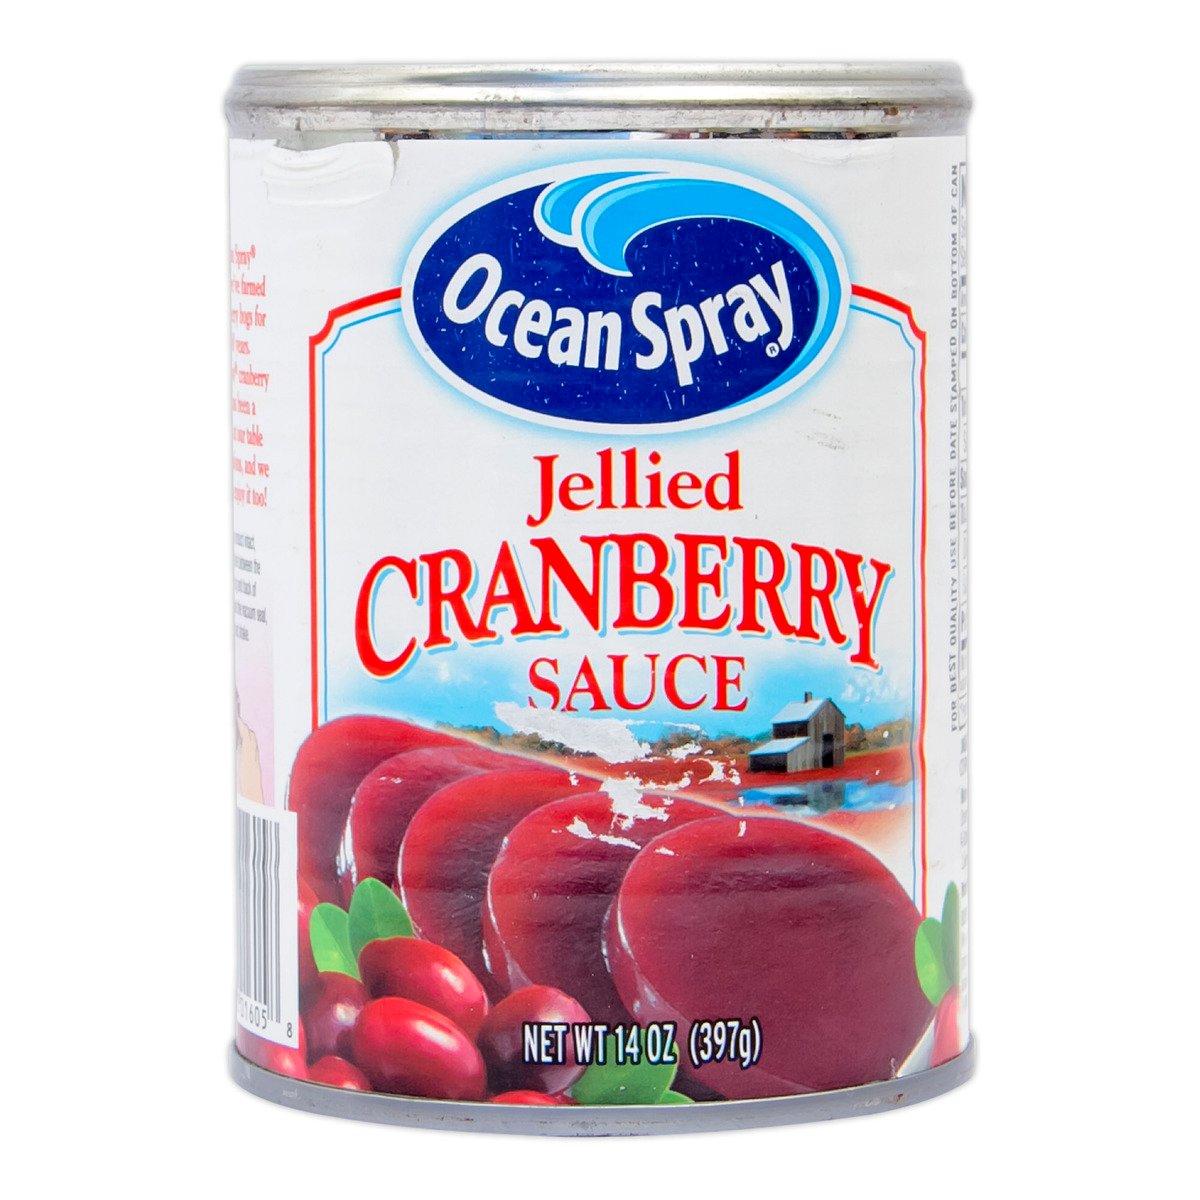 Ocean Spray Jellied Cranberry Sauce 397 g